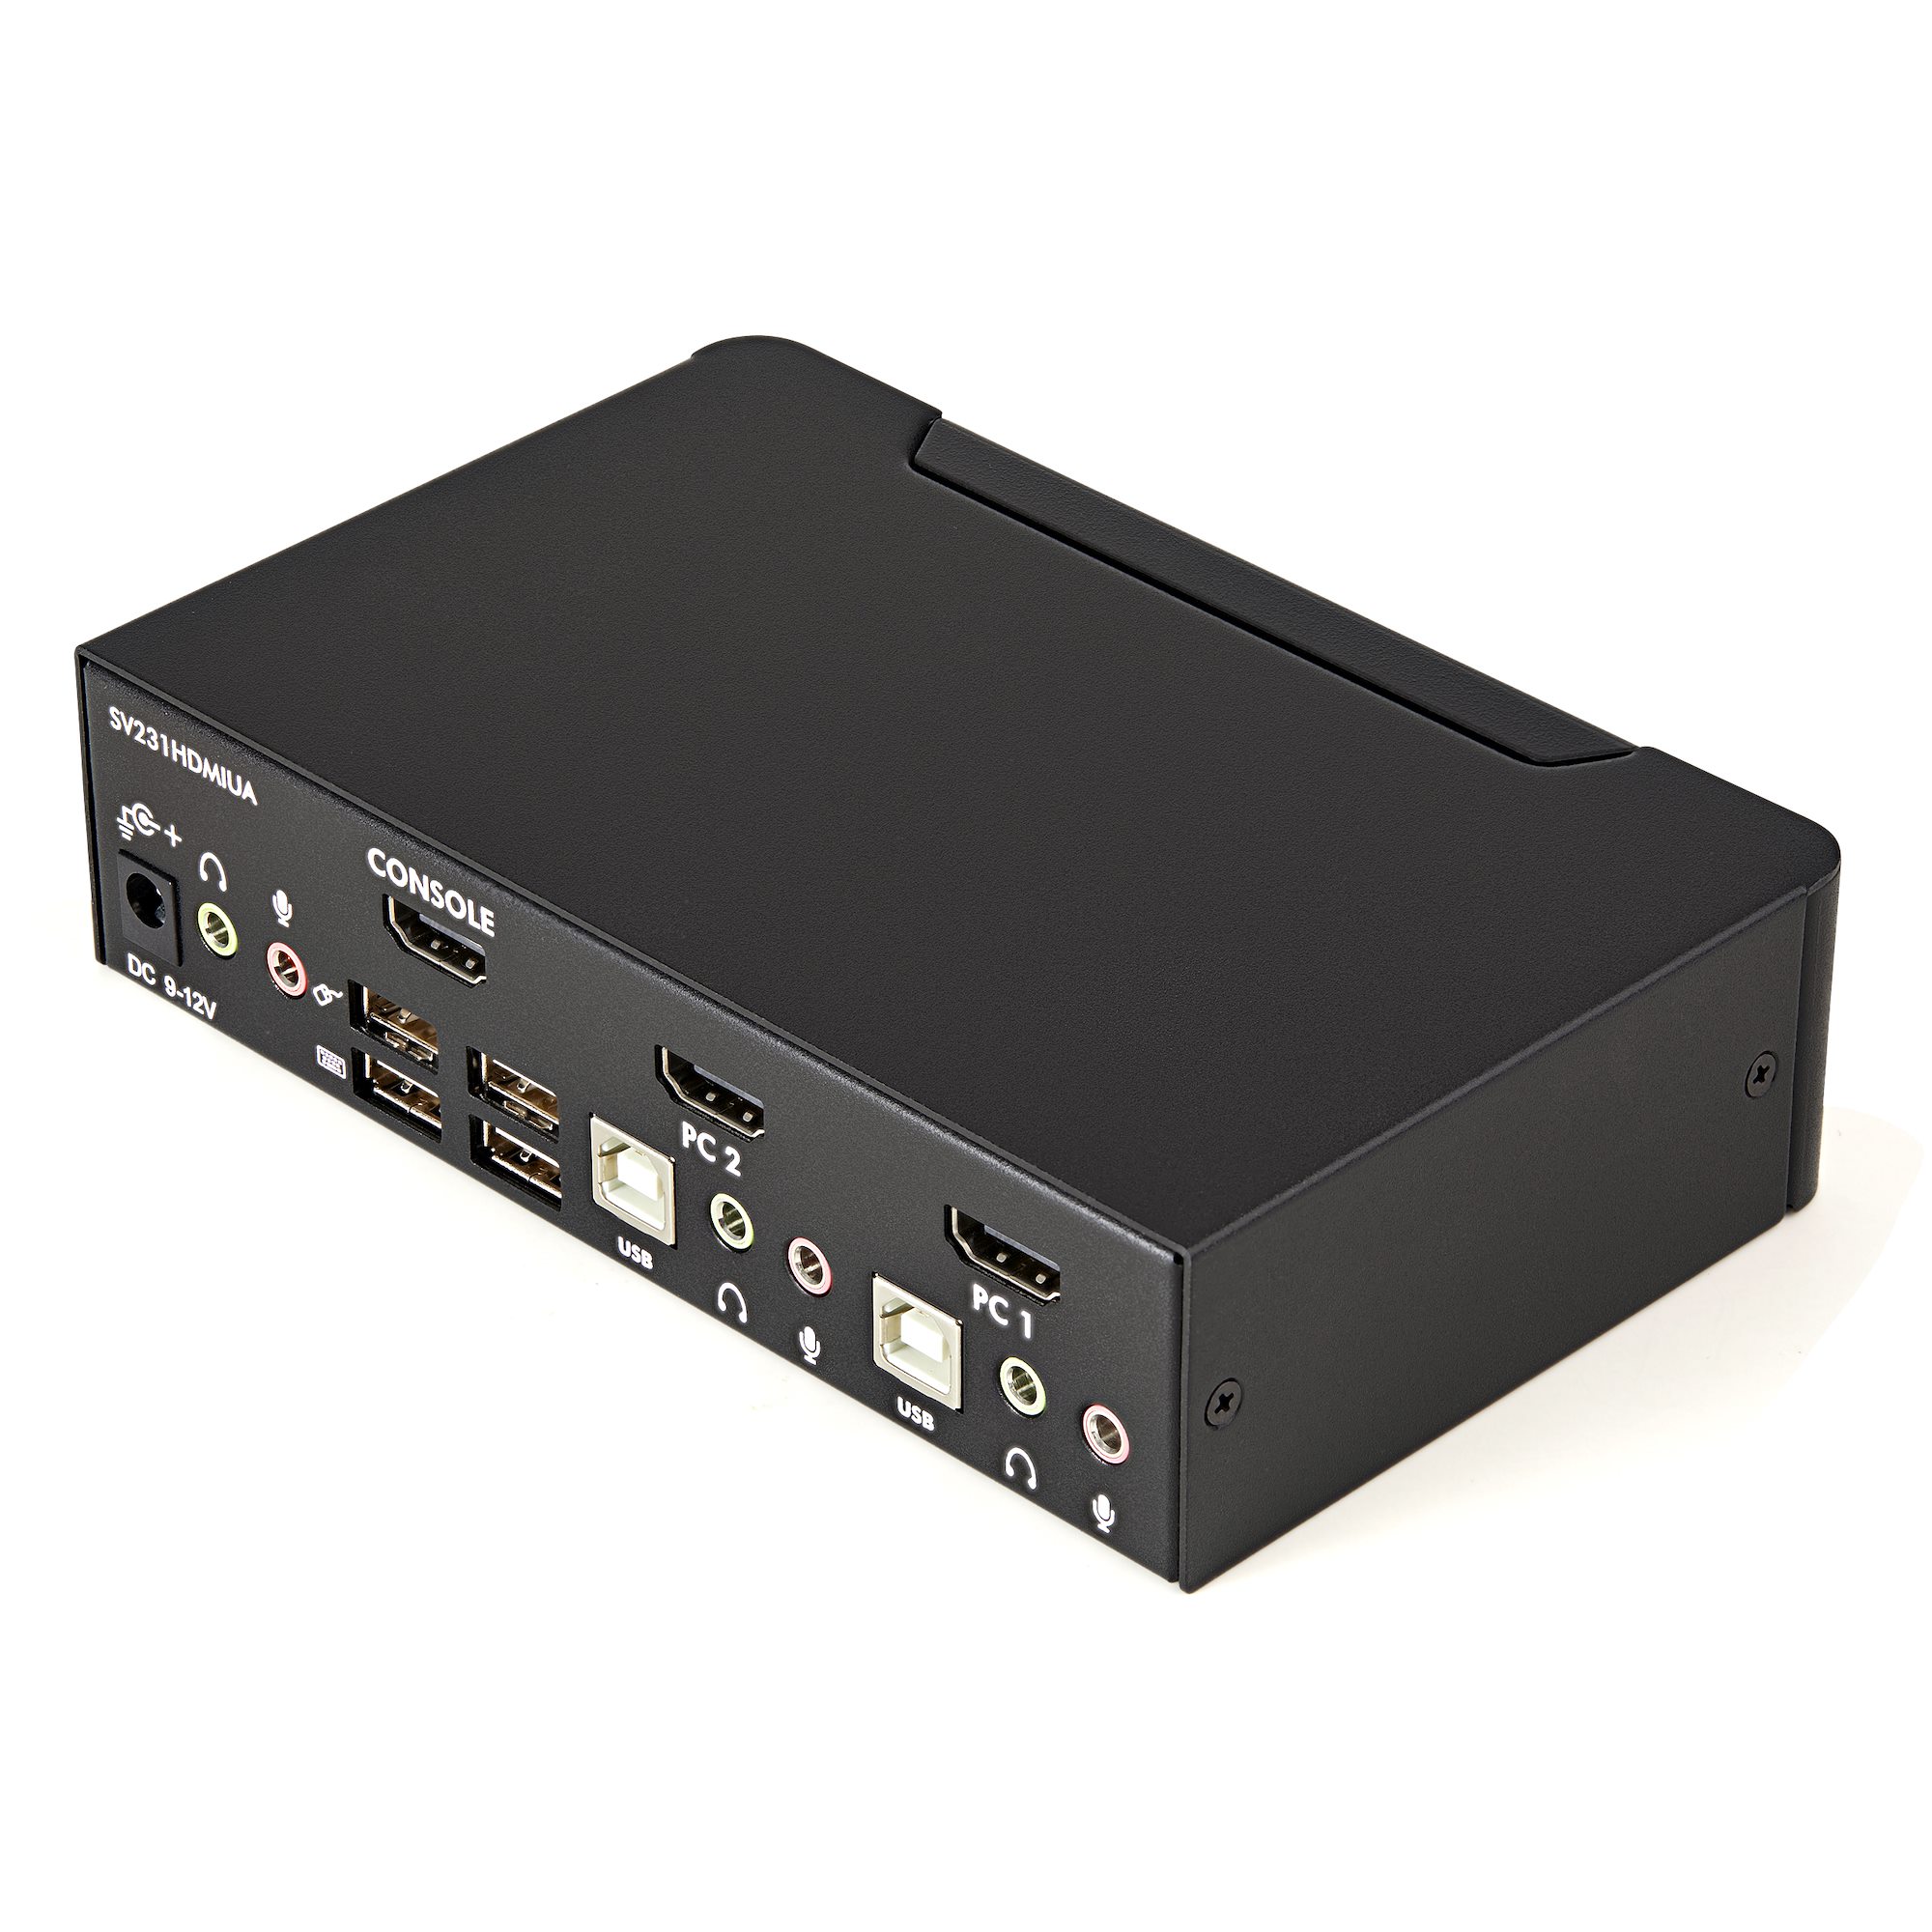 StarTech.com 2 Port Hybrid USB-A + HDMI and USB-C KVM Switch - 1x 4K 60Hz  HDMI 2.0 Monitor - Compact - SV221HUC4K - KVM Modules 